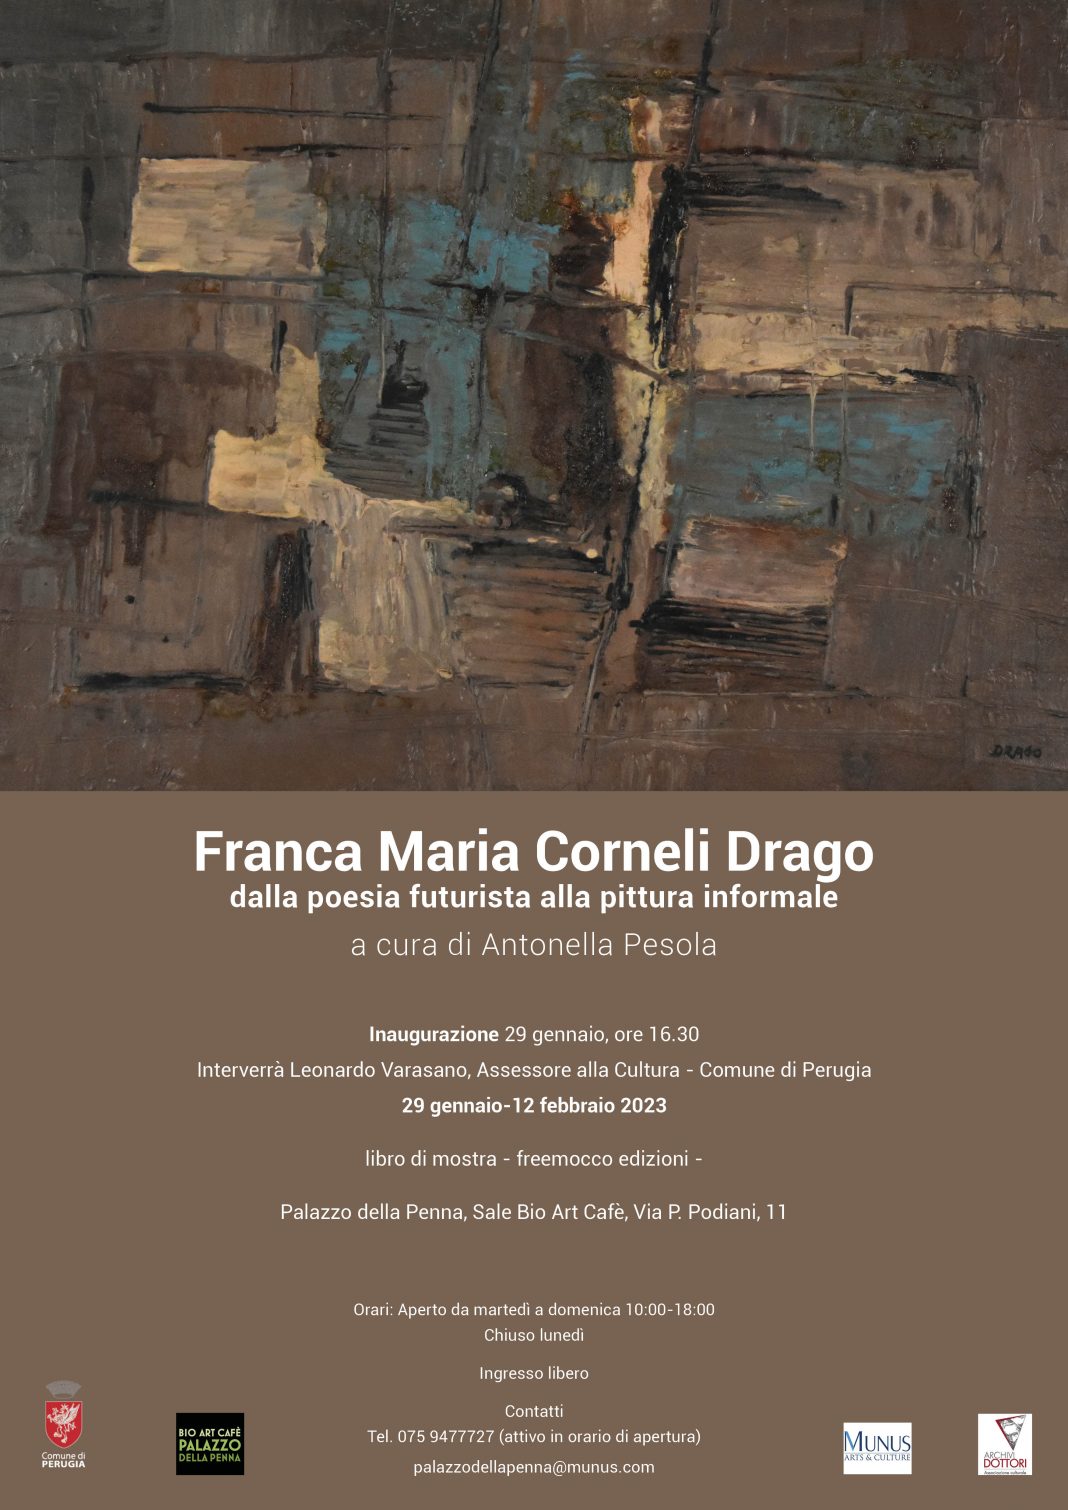 Franca Maria Corneli Drago. Dalla poesia futurista alla pittura informalehttps://www.exibart.com/repository/media/formidable/11/img/410/locandina-1068x1510.jpg